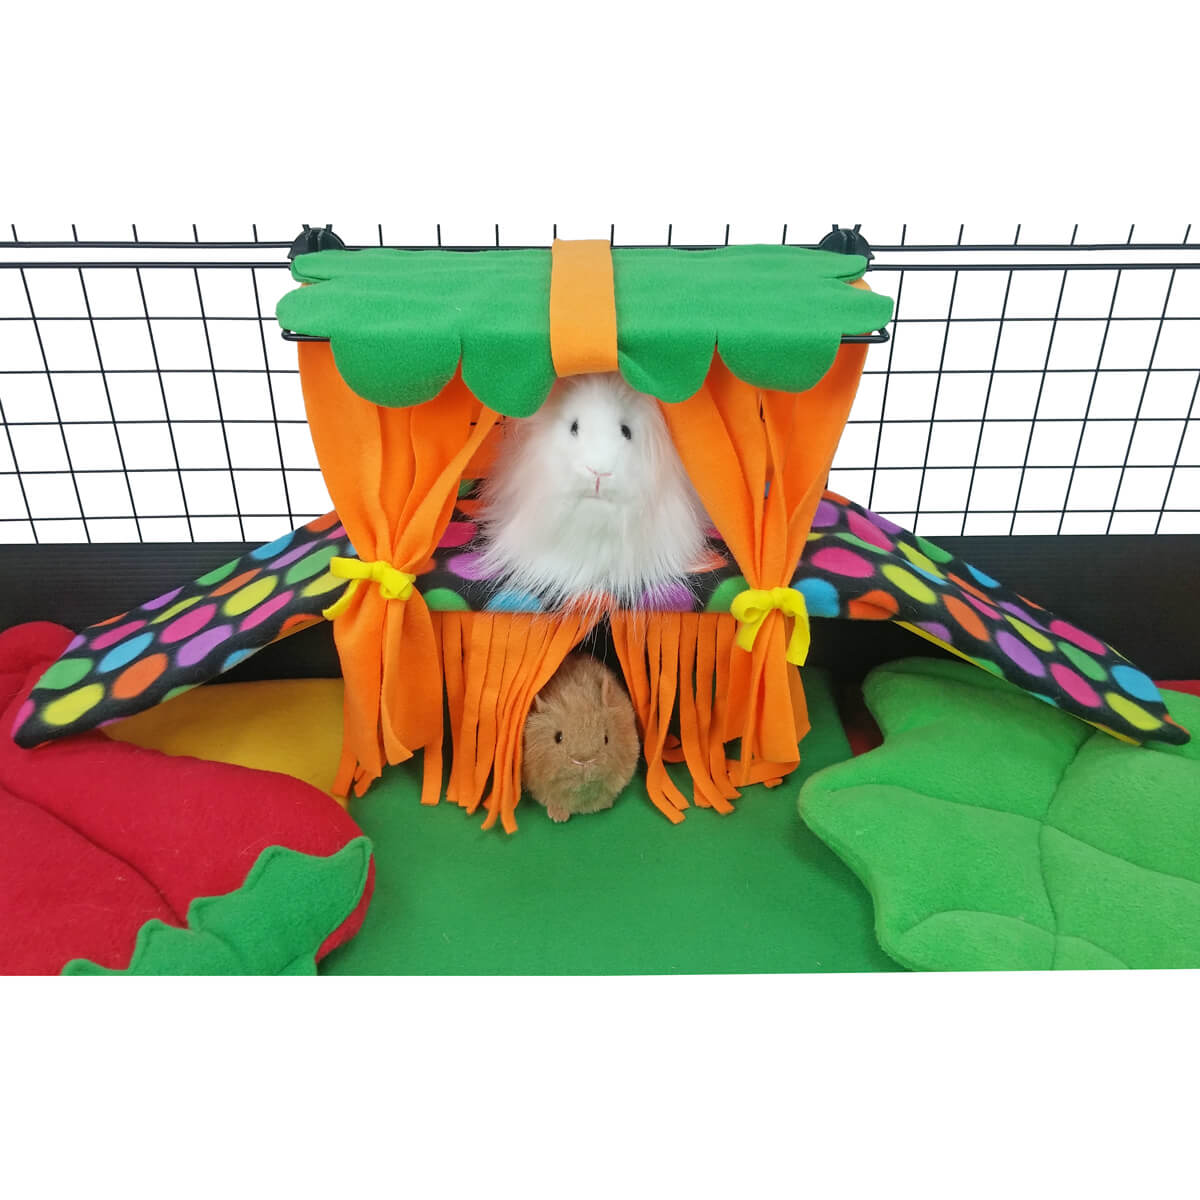 Piggy Perch C&C cage addition for guinea pigs